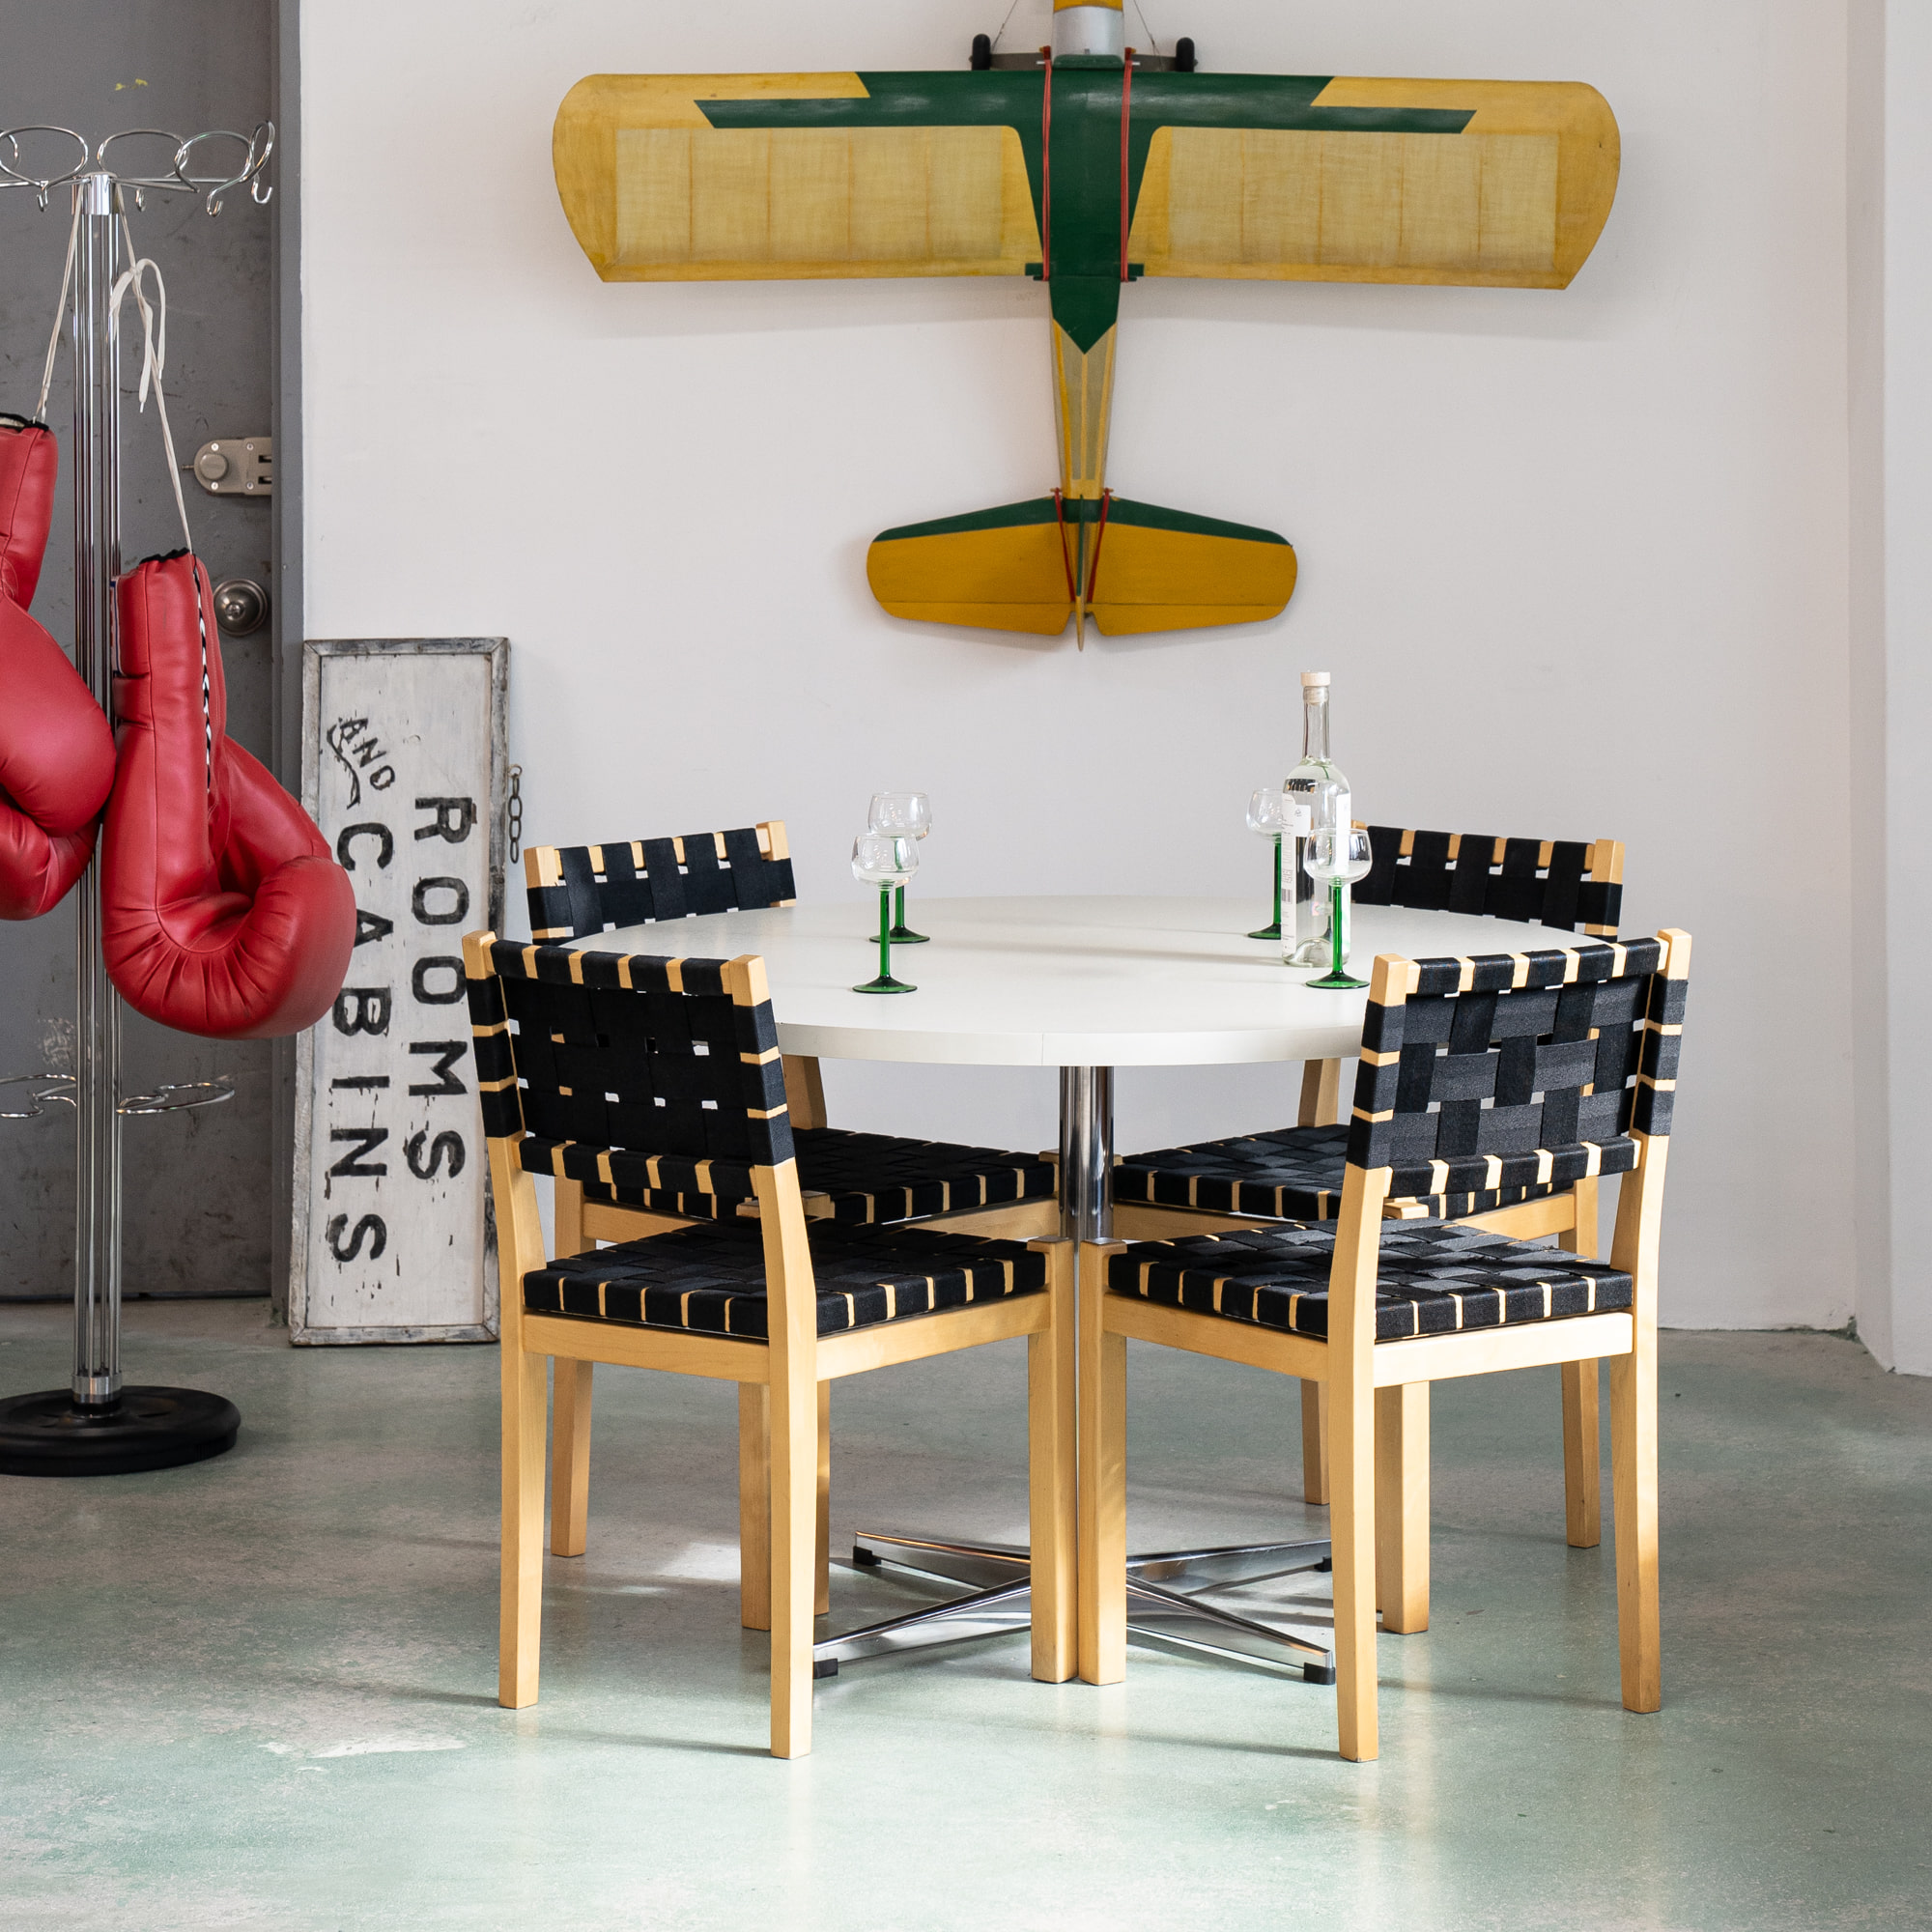 Model 615 Chair by Alvar Aalto